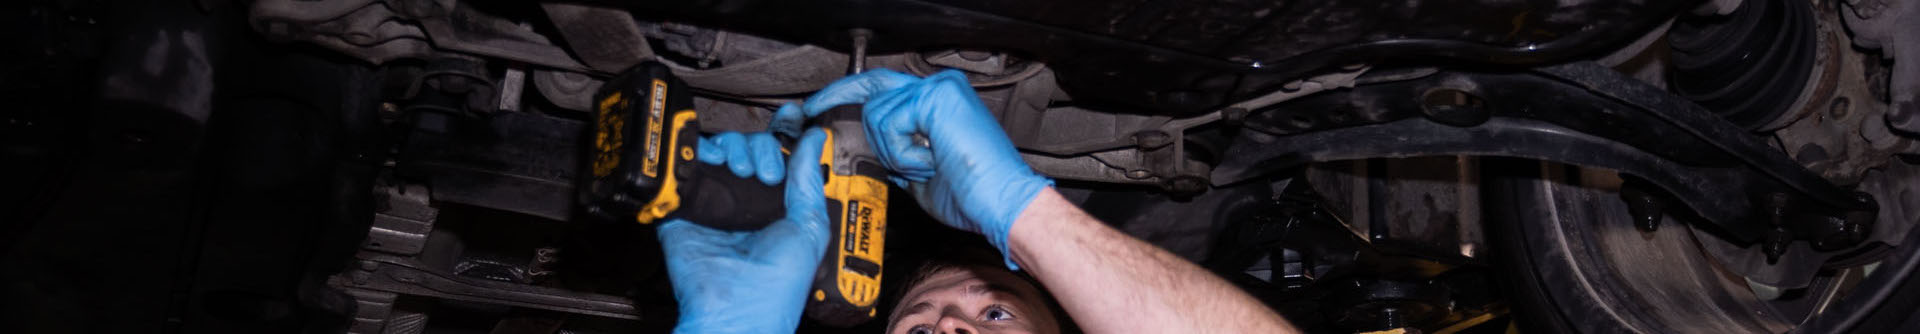 https://autotechrecruit.co.uk/wp-content/uploads/2019/07/Autotech-Recruit-Technician-inspecting-car-engine.jpg